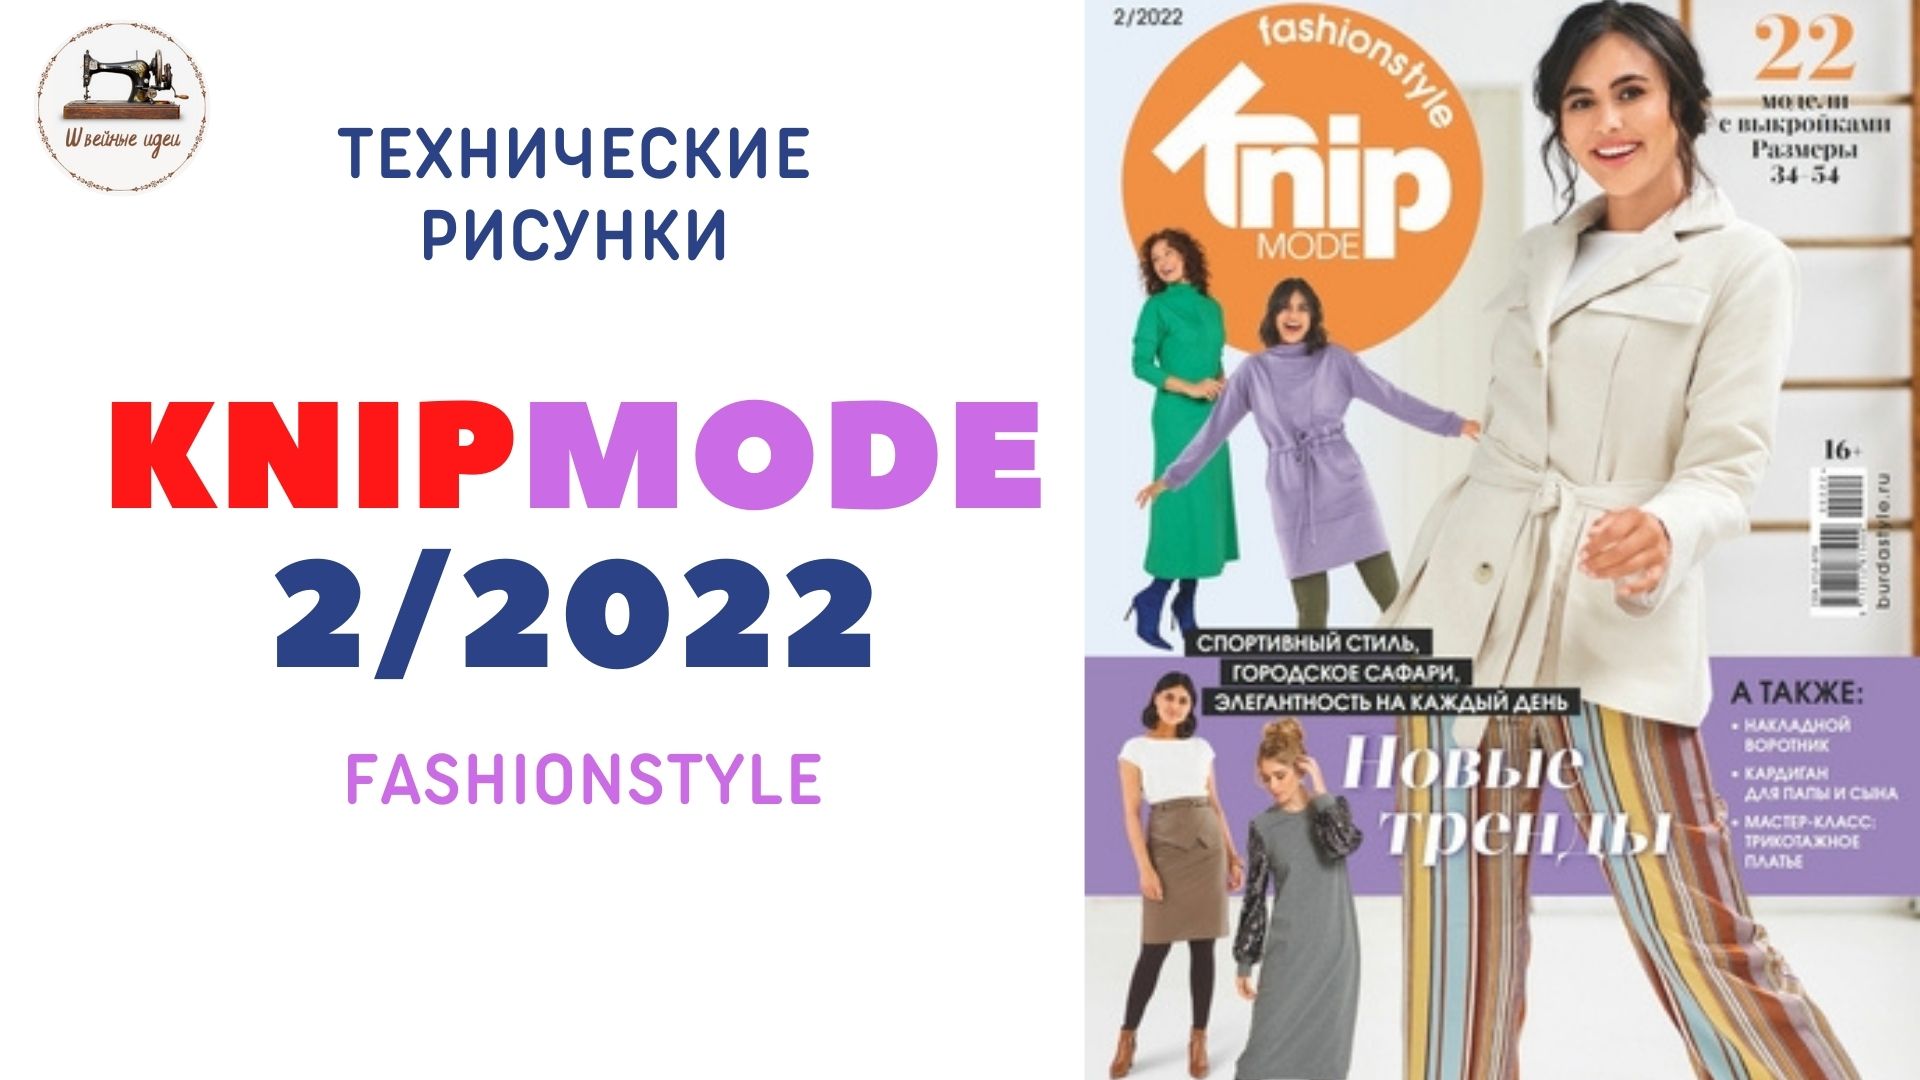 Knipmode Fashionstyle  2/2022. Технические рисунки